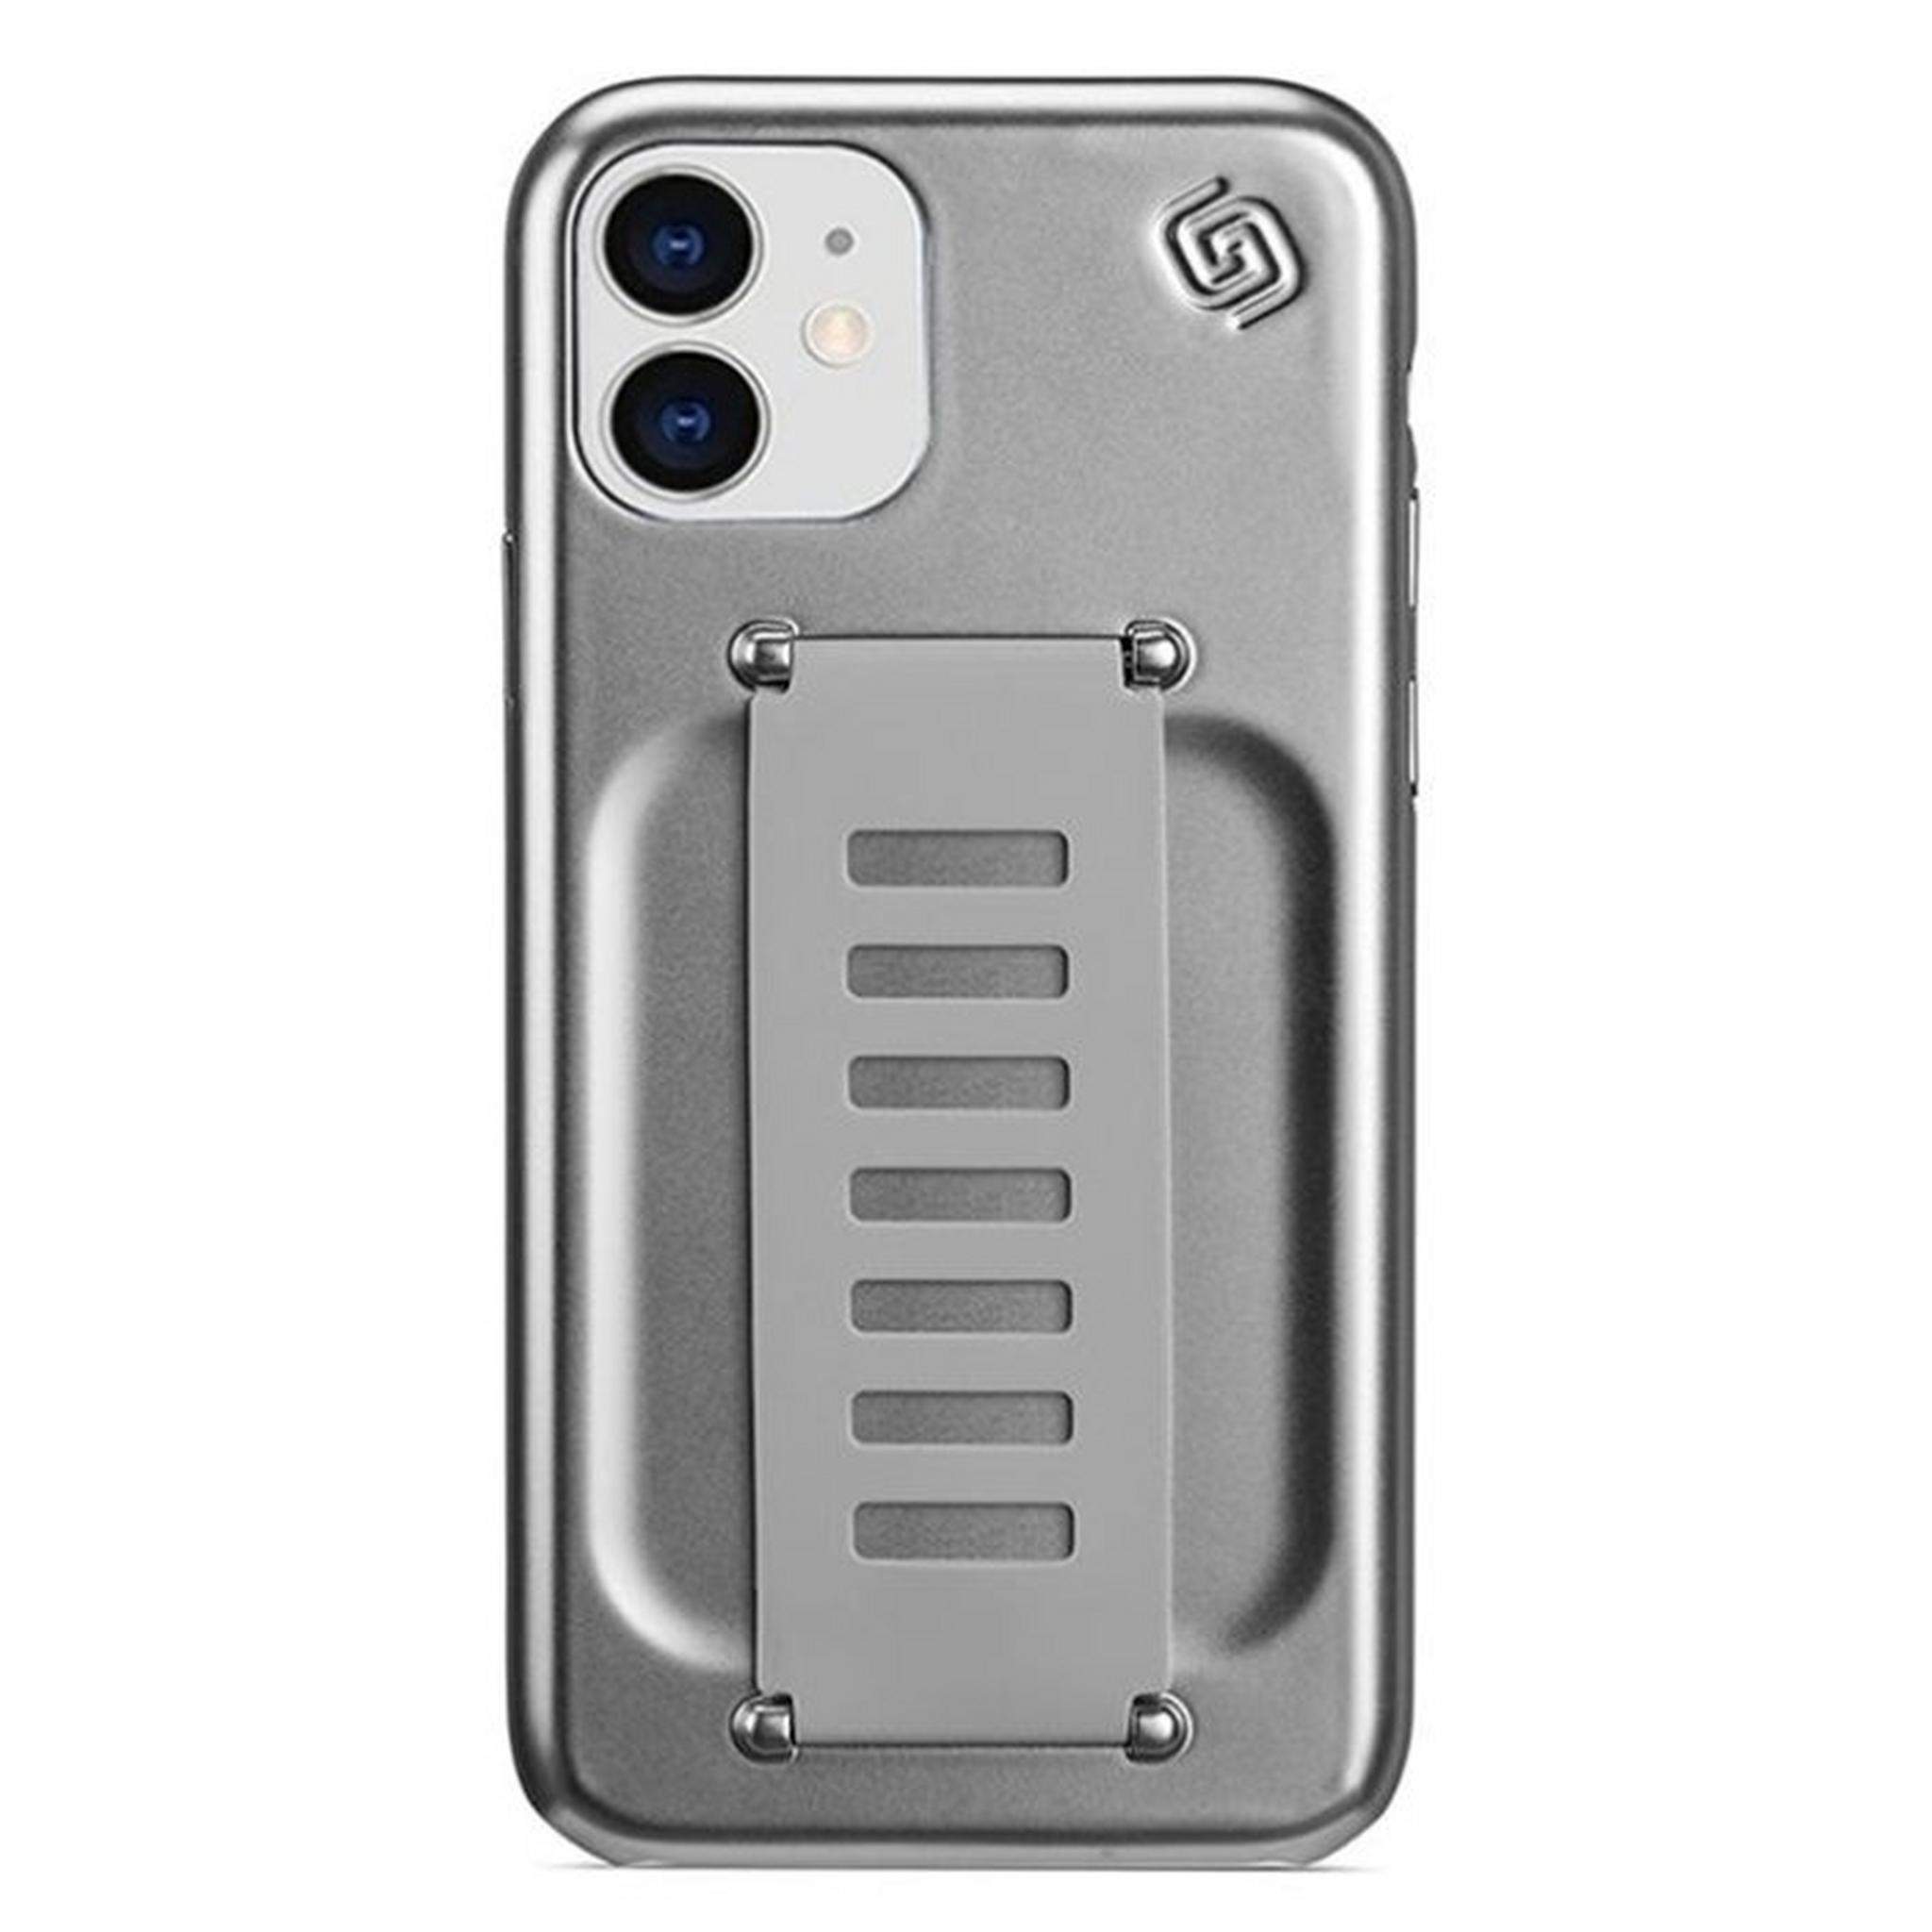 Grip2U Slim Case for iPhone 11 - Metallic Silver